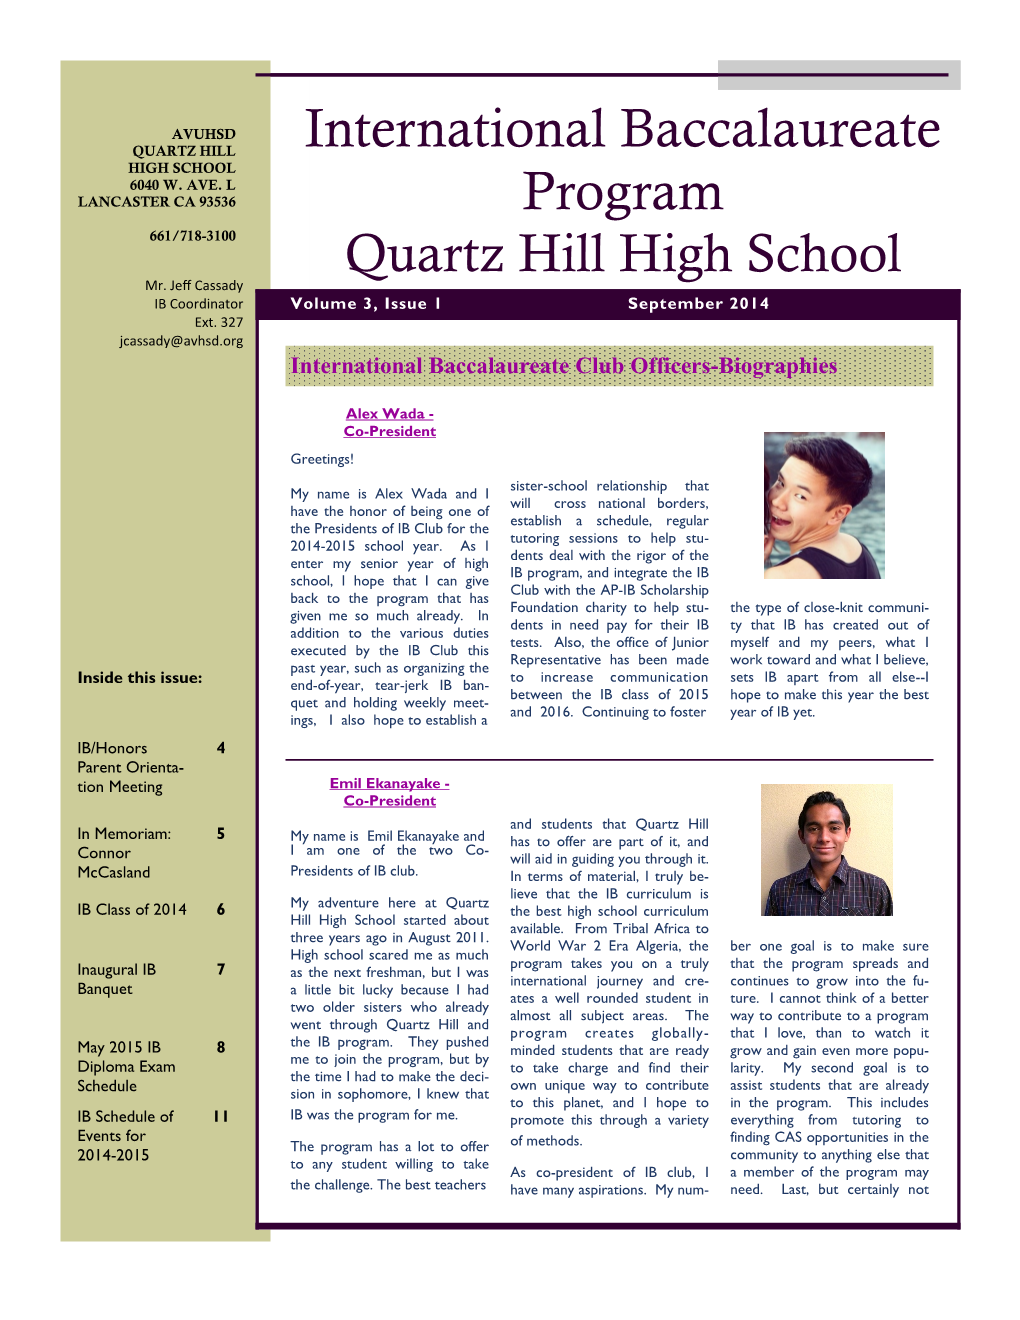 International Baccalaureate Program Quartz Hill High School